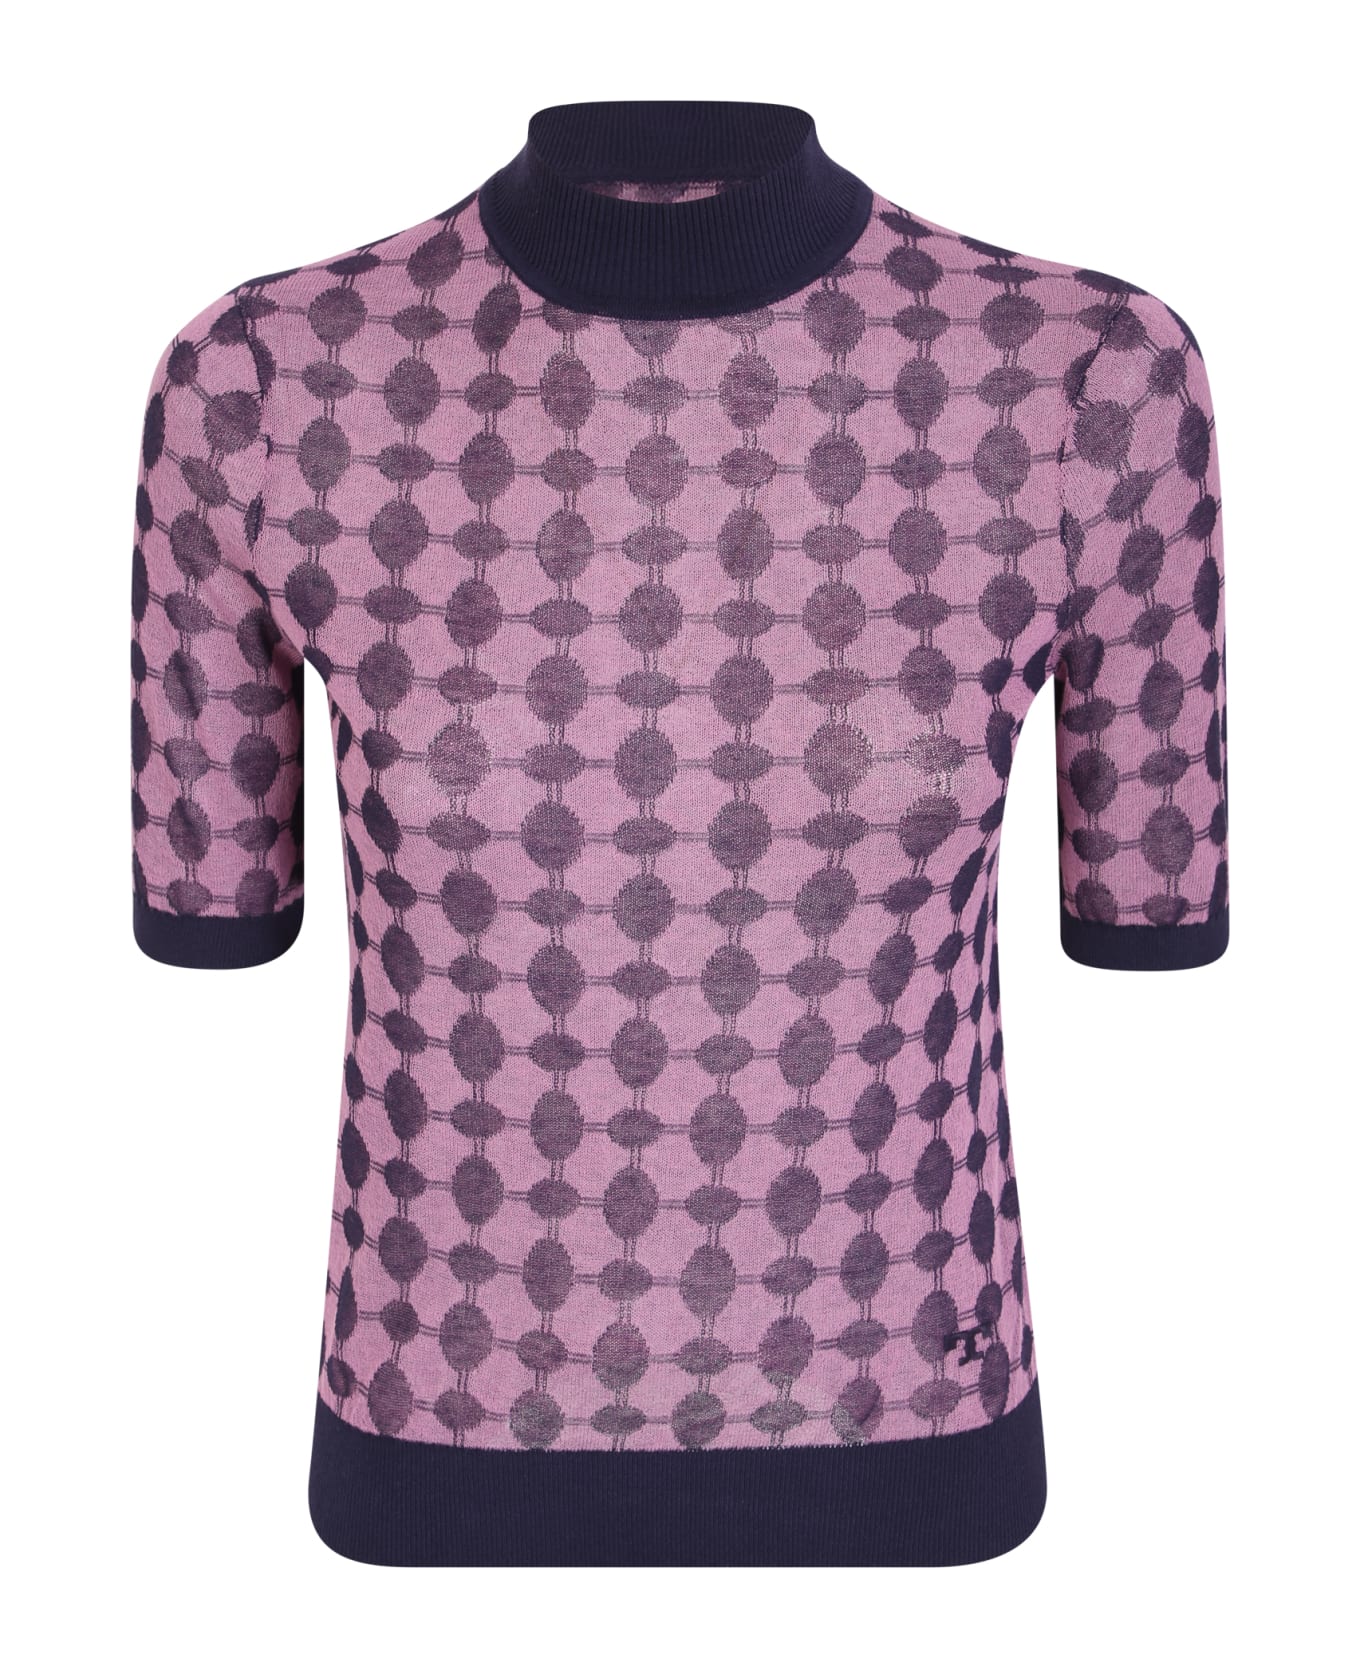 Tory Burch Geometric Print High Neck Pullover - Purple